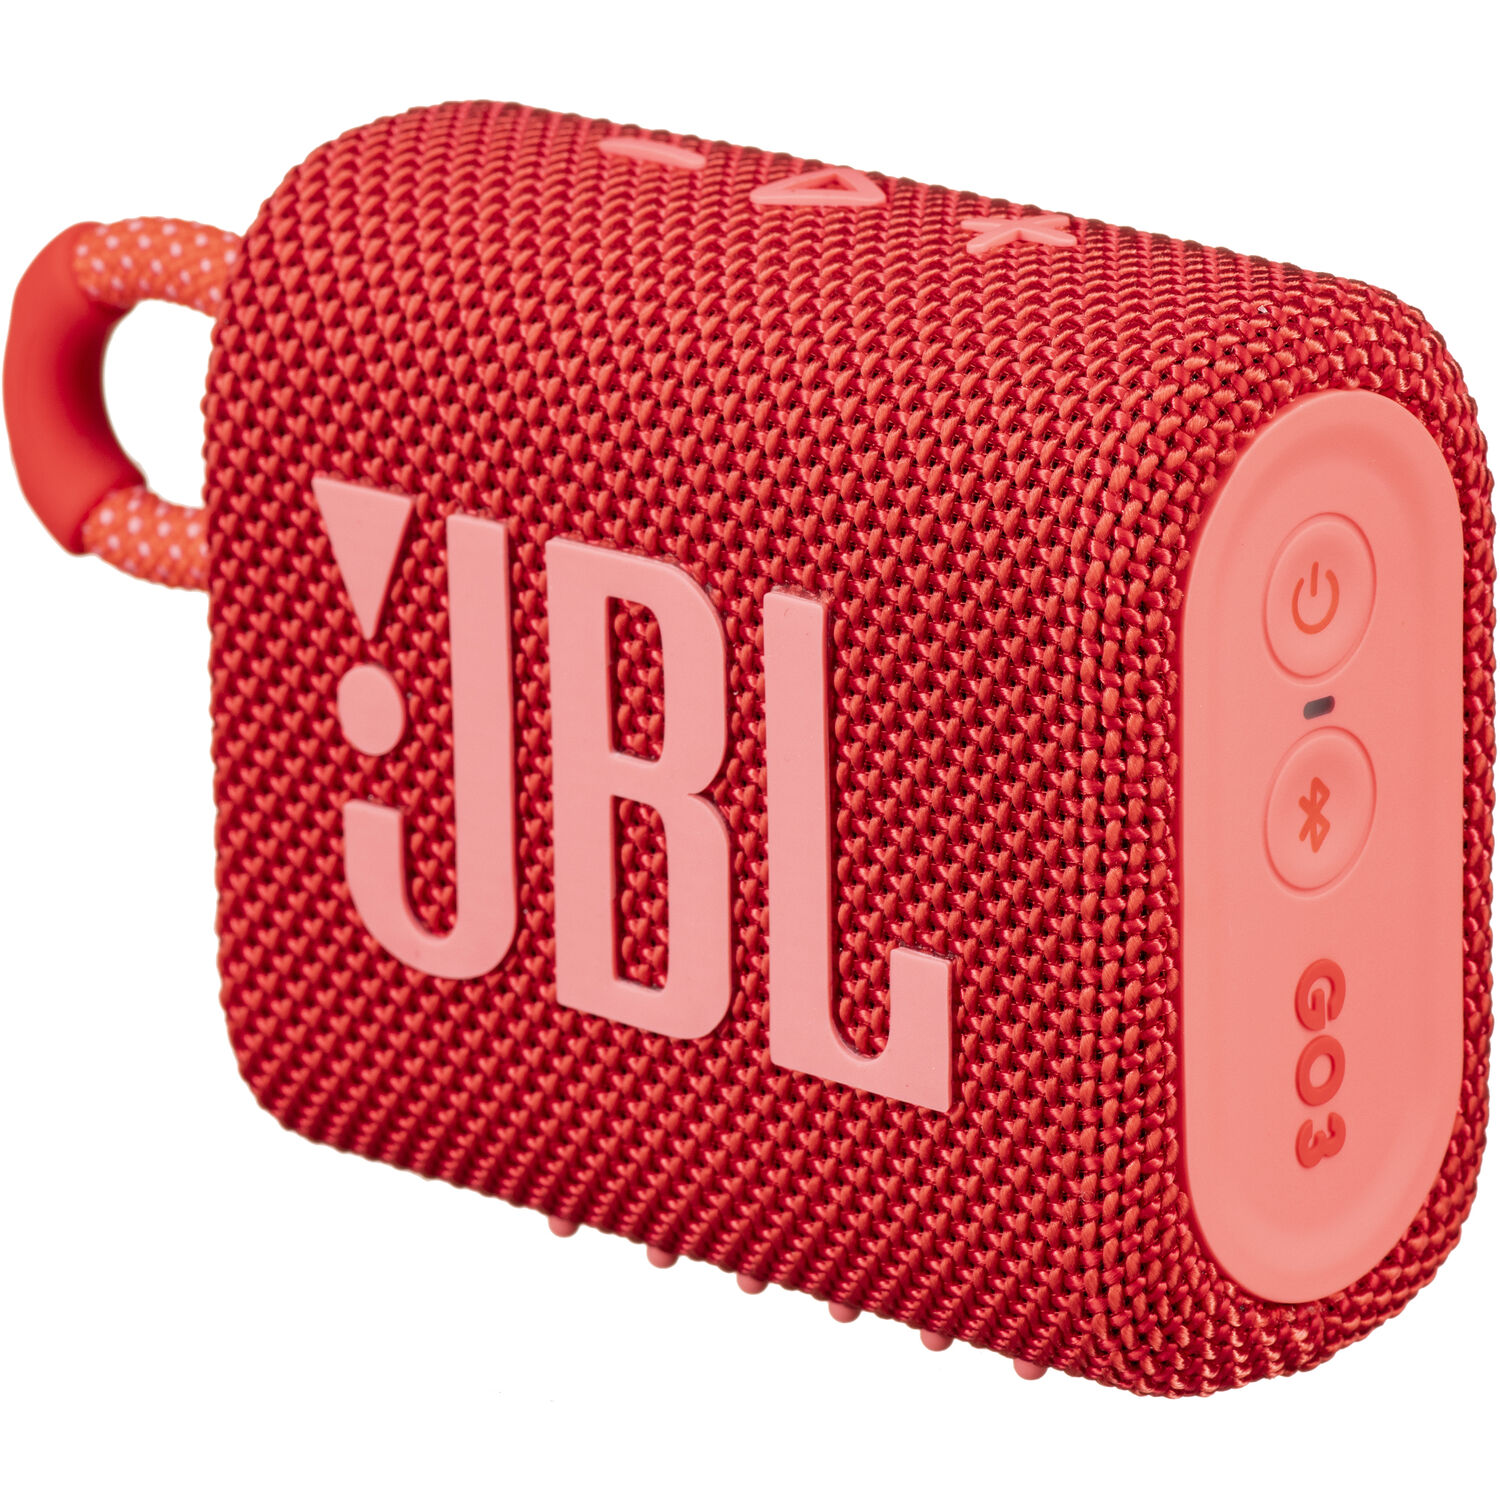 Jbl Go 3 Portable Bluetooth Speaker Gray Jblgo3gryam B H Photo